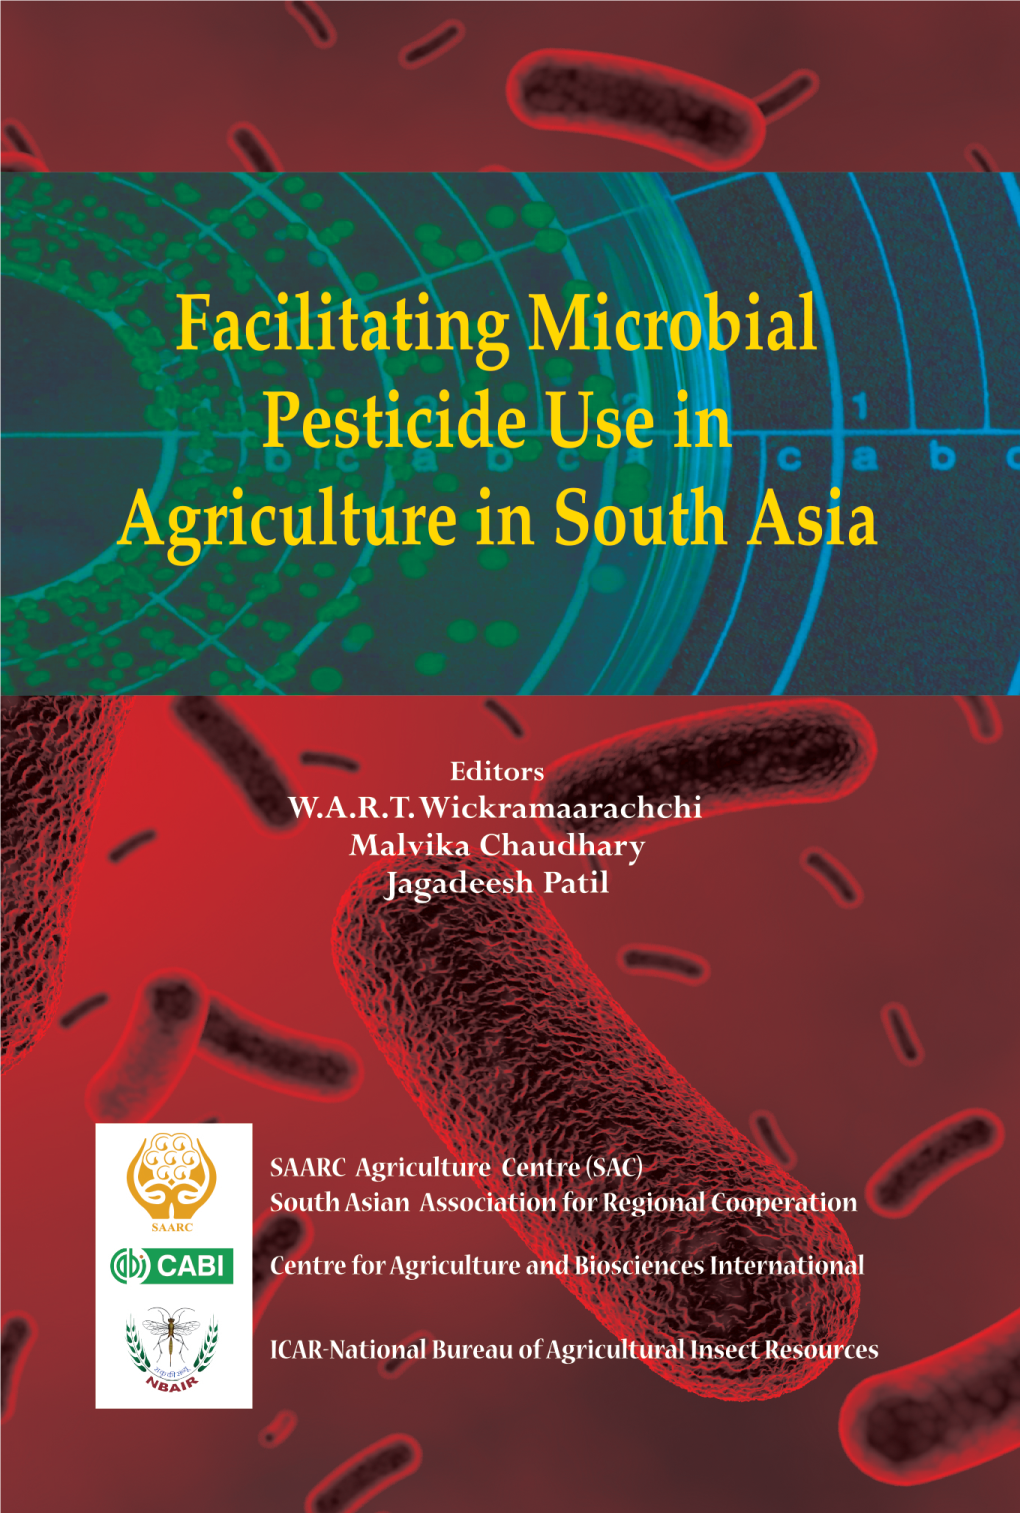 Microbial Pesticides